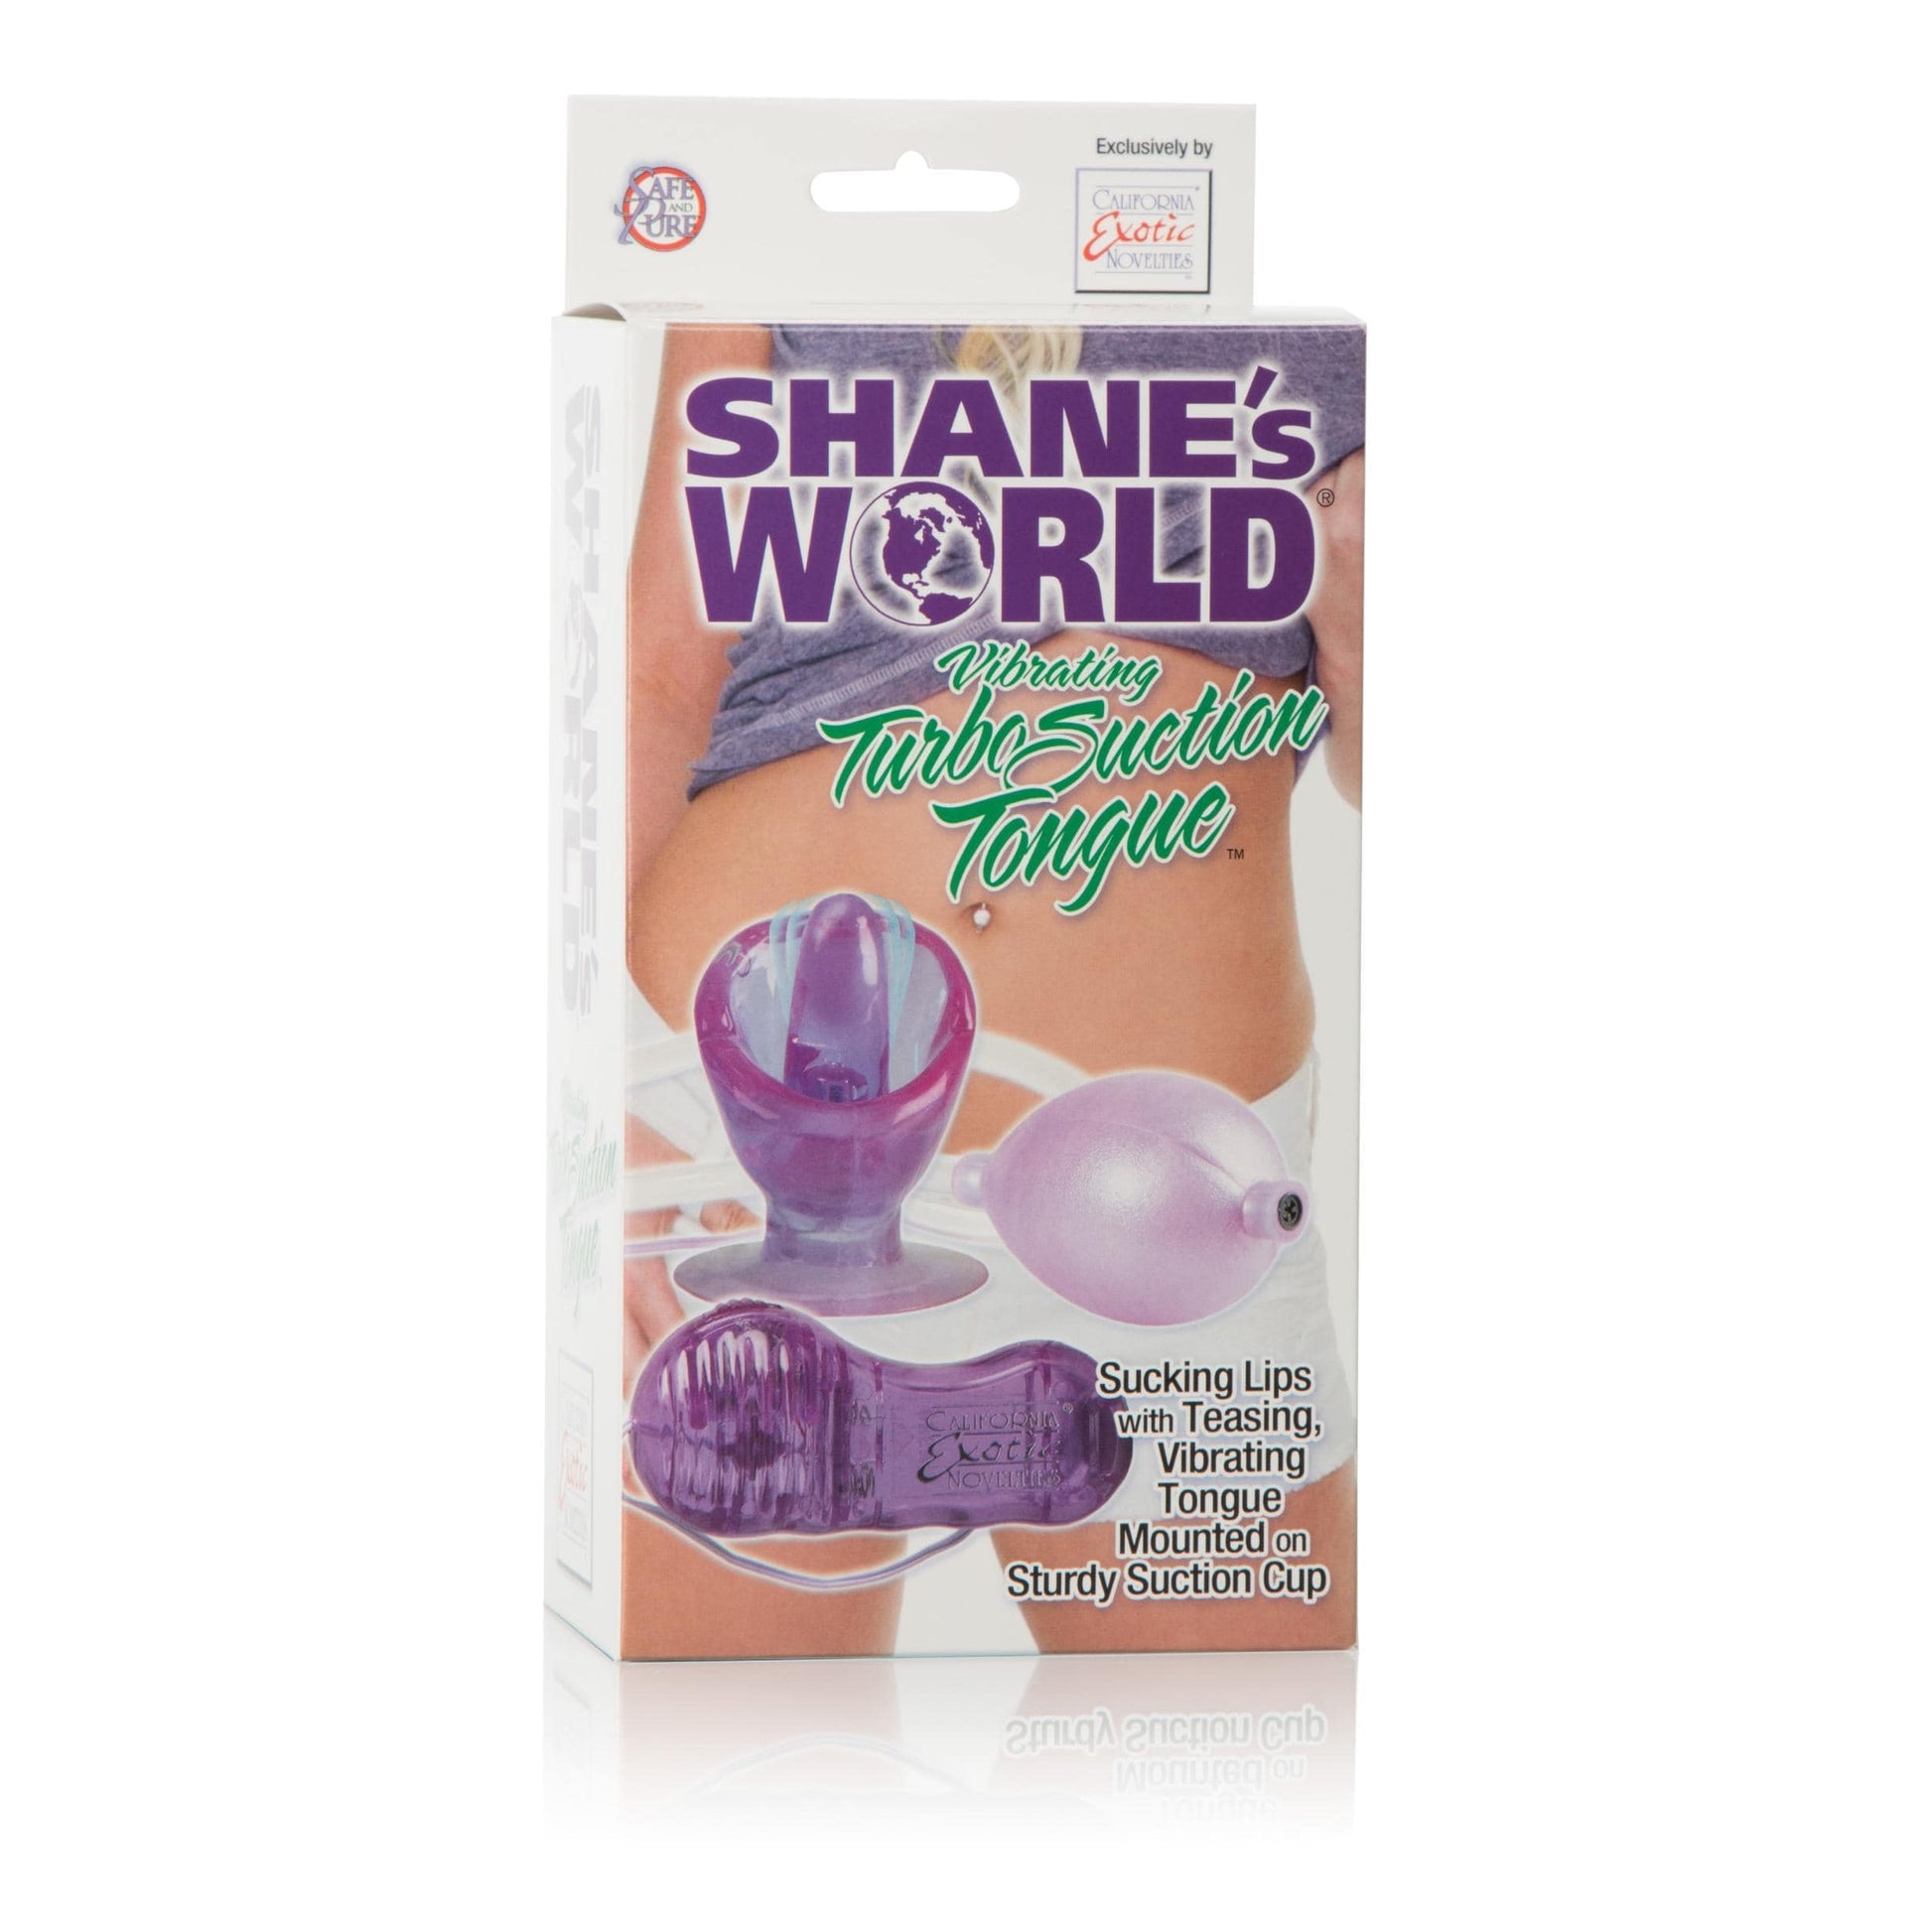 calexotics   shanes world vibrating turbo suction tongue purple